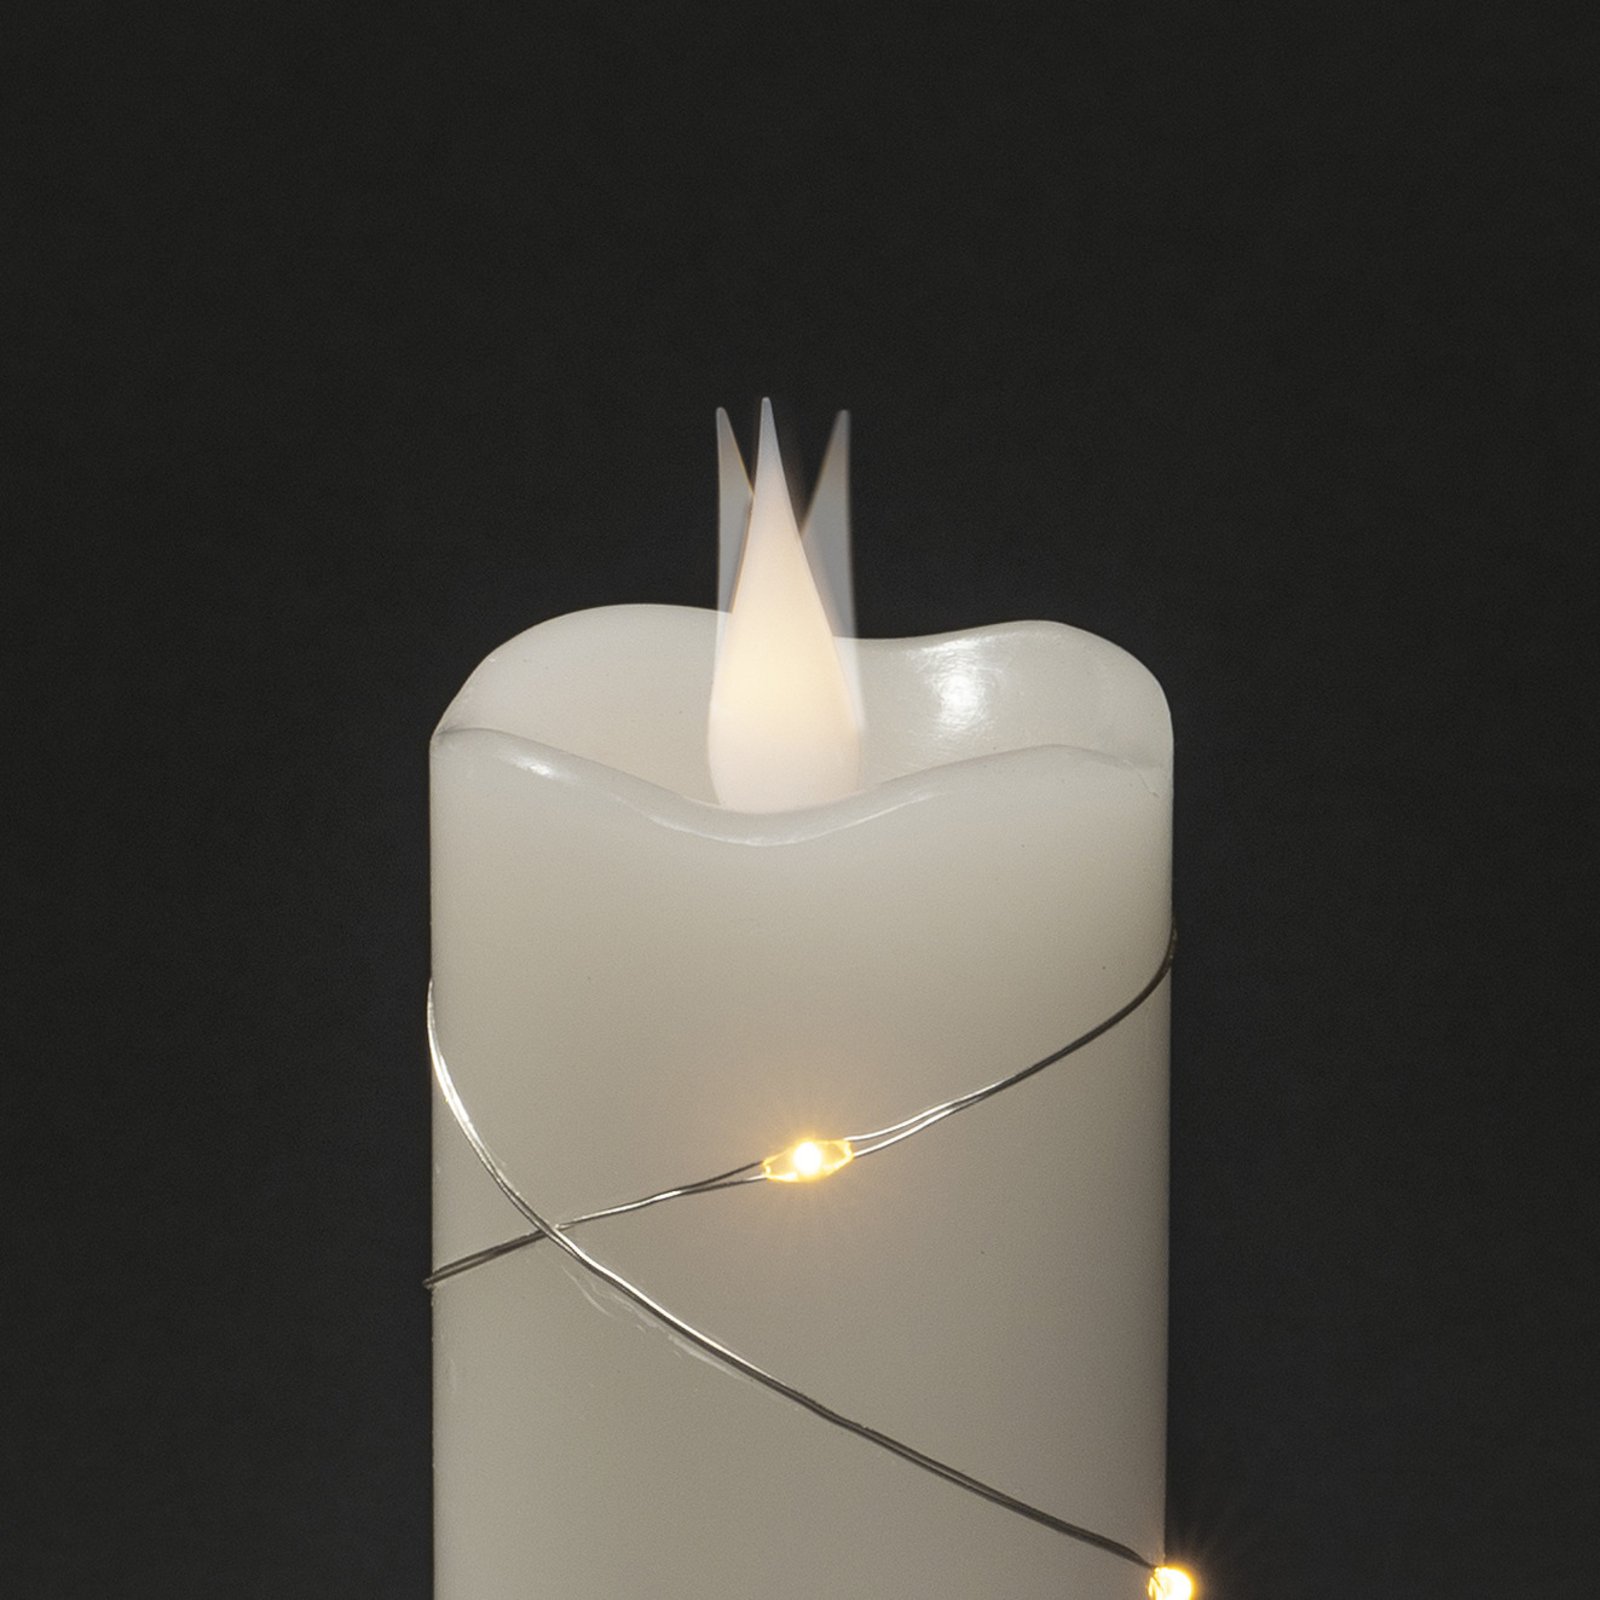 LED vosková svíčka bílá Barva světla teplá bílá 12,7 cm